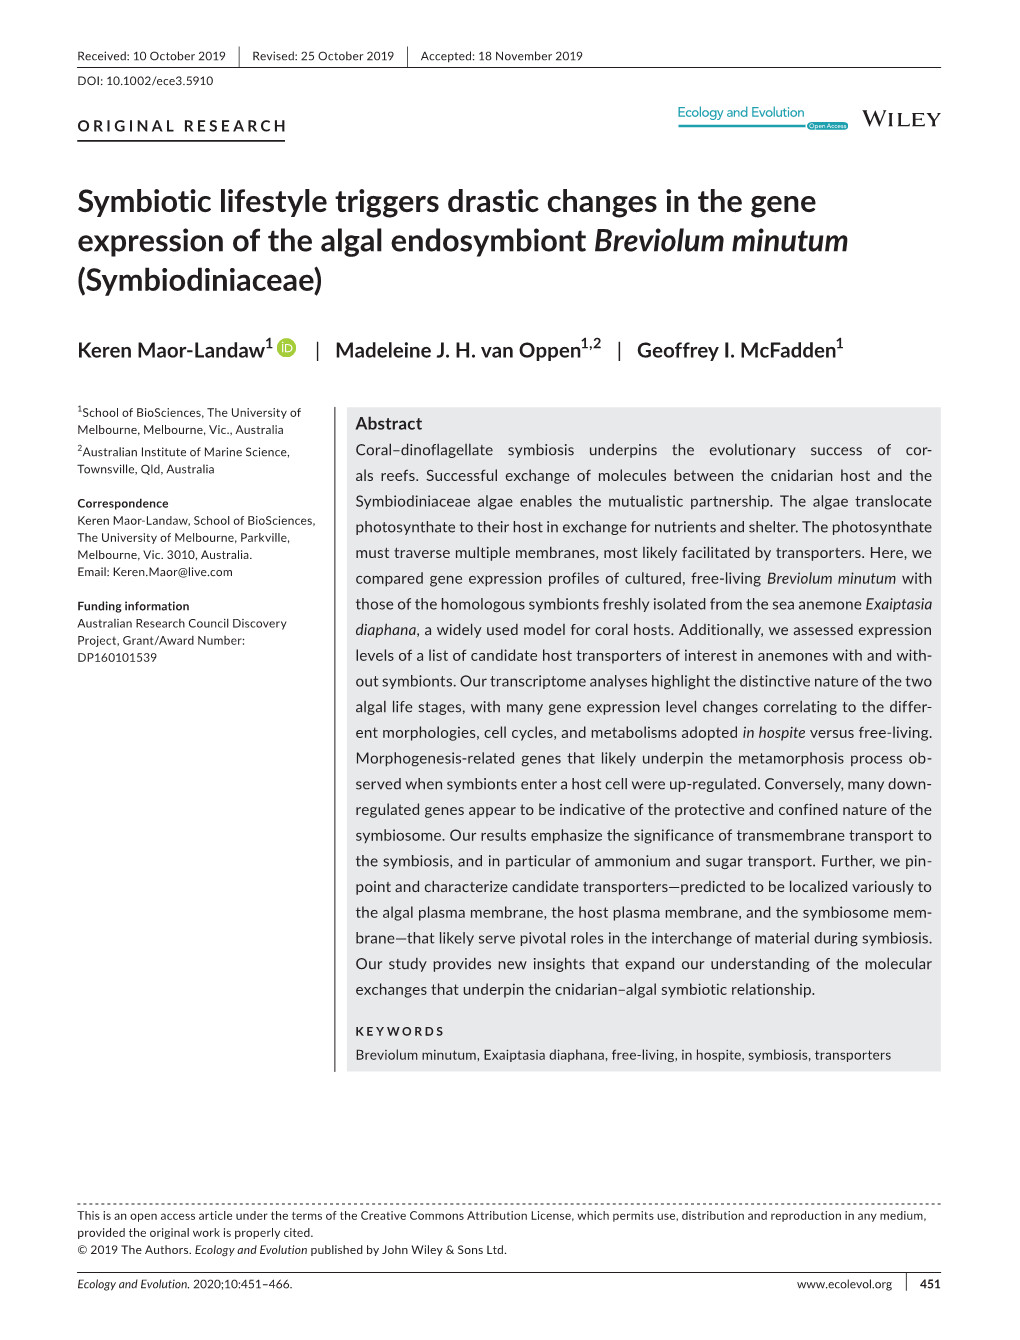 Symbiotic Lifestyle Triggers Drastic Changes in the Gene Expression of the Algal Endosymbiont Breviolum Minutum (Symbiodiniaceae)